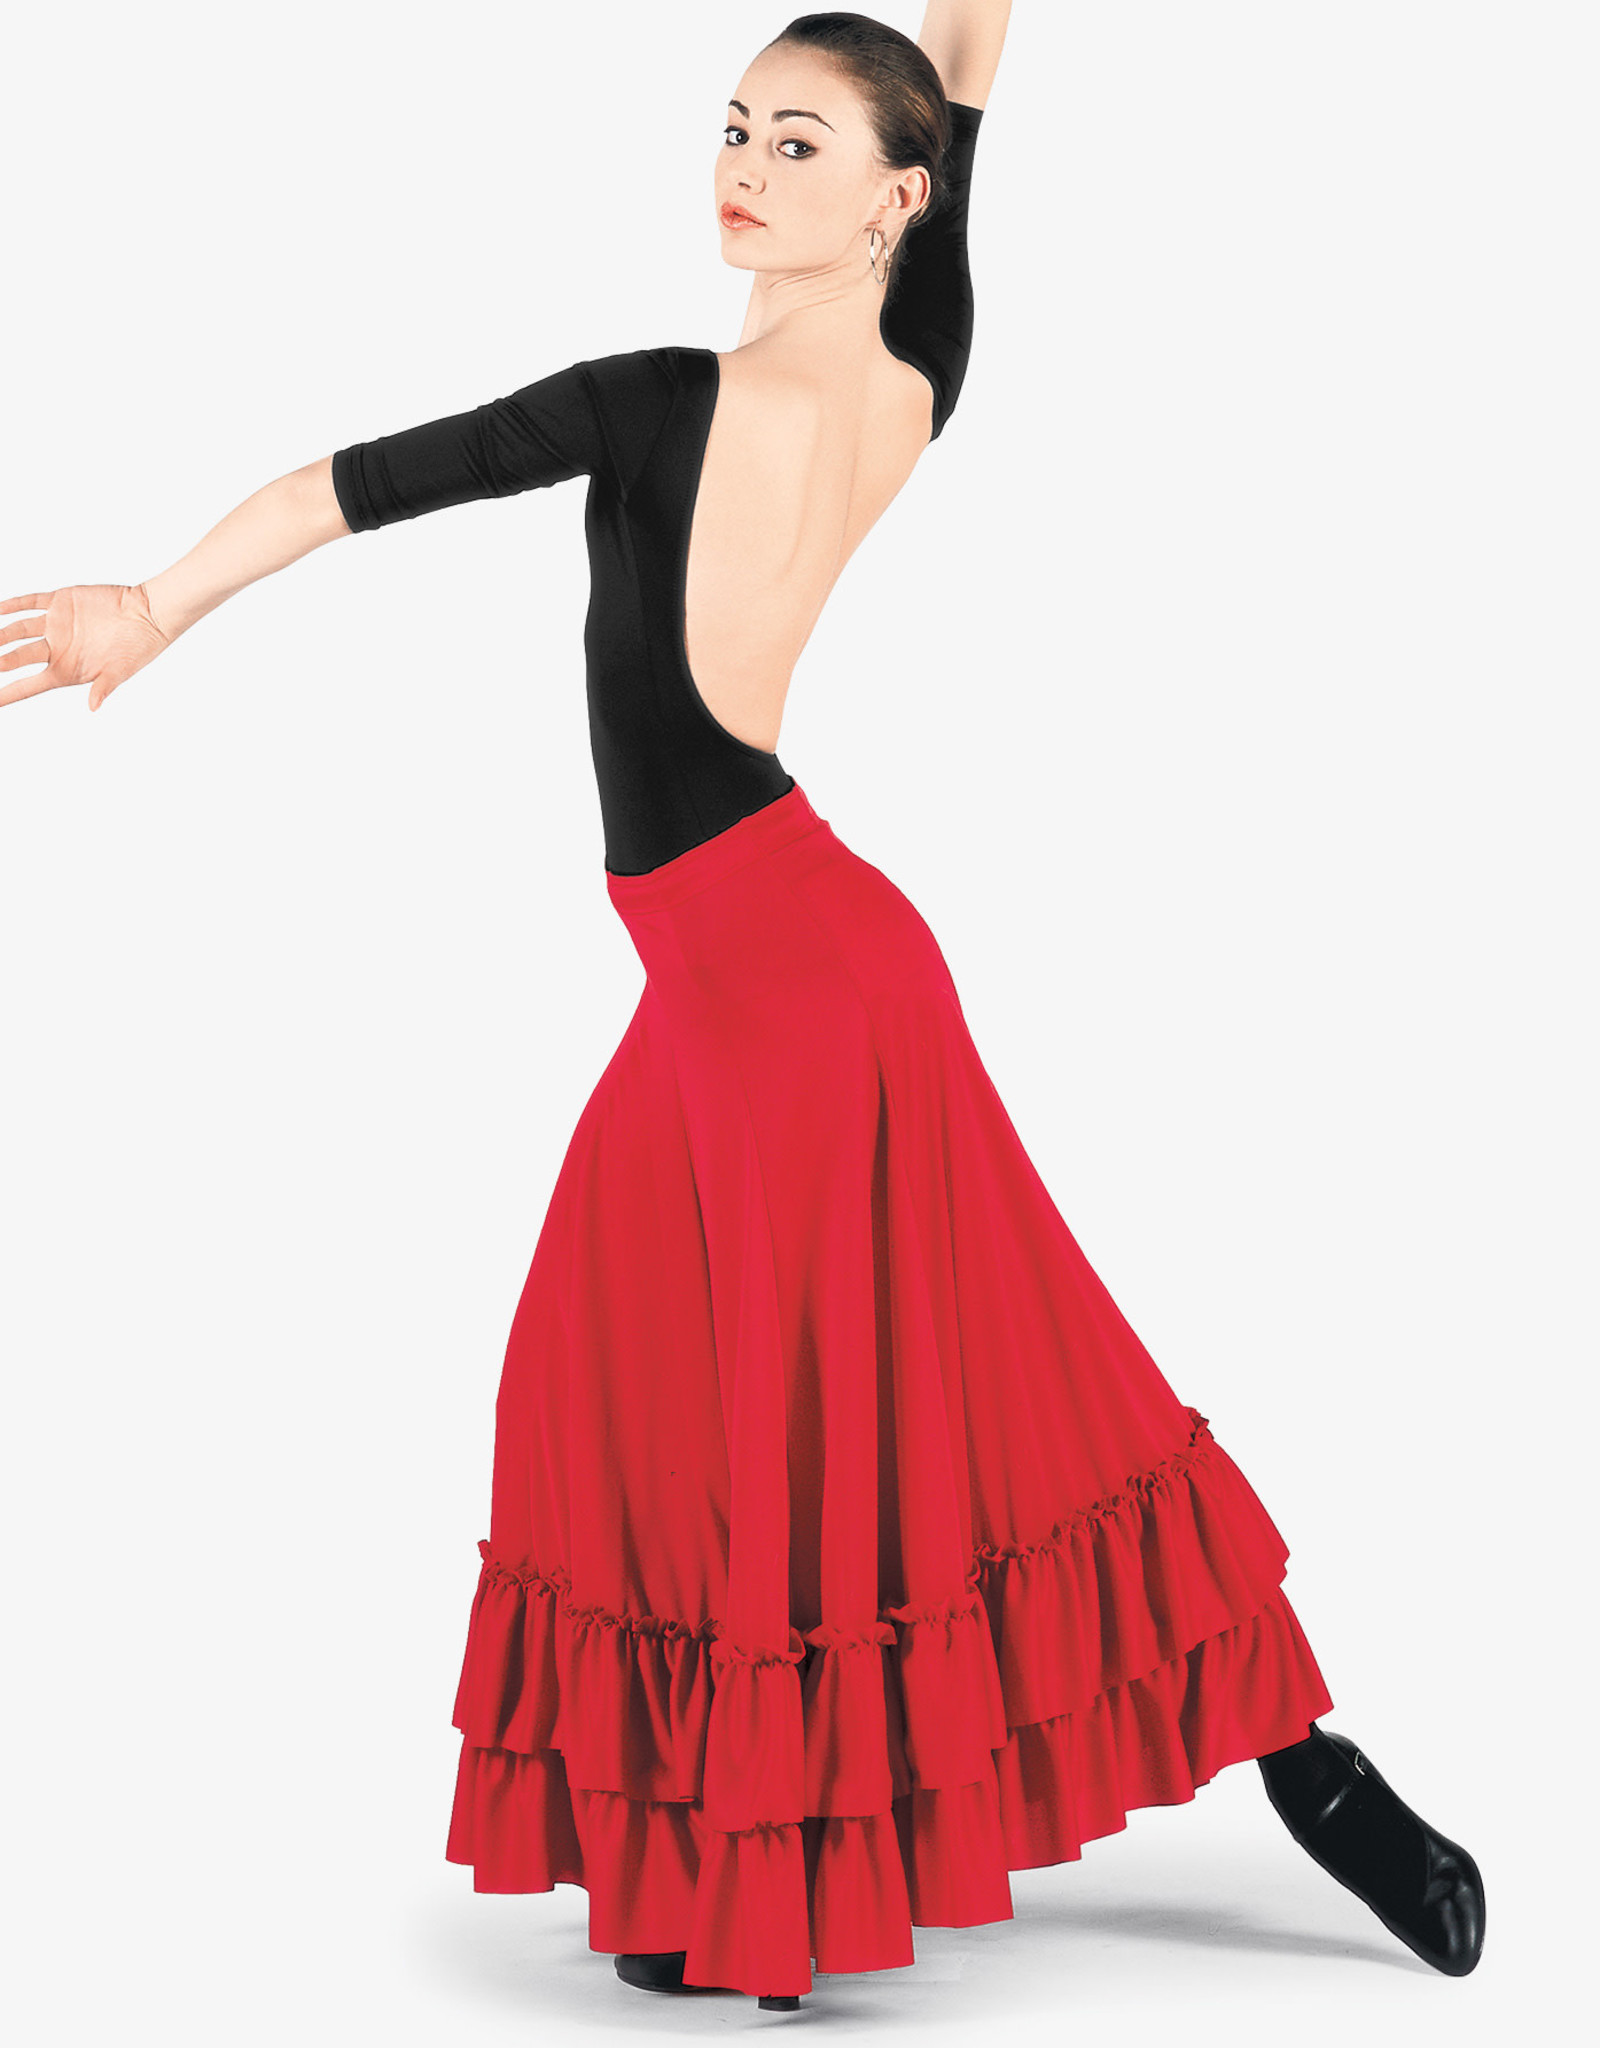 Flamenco costume, Size 36